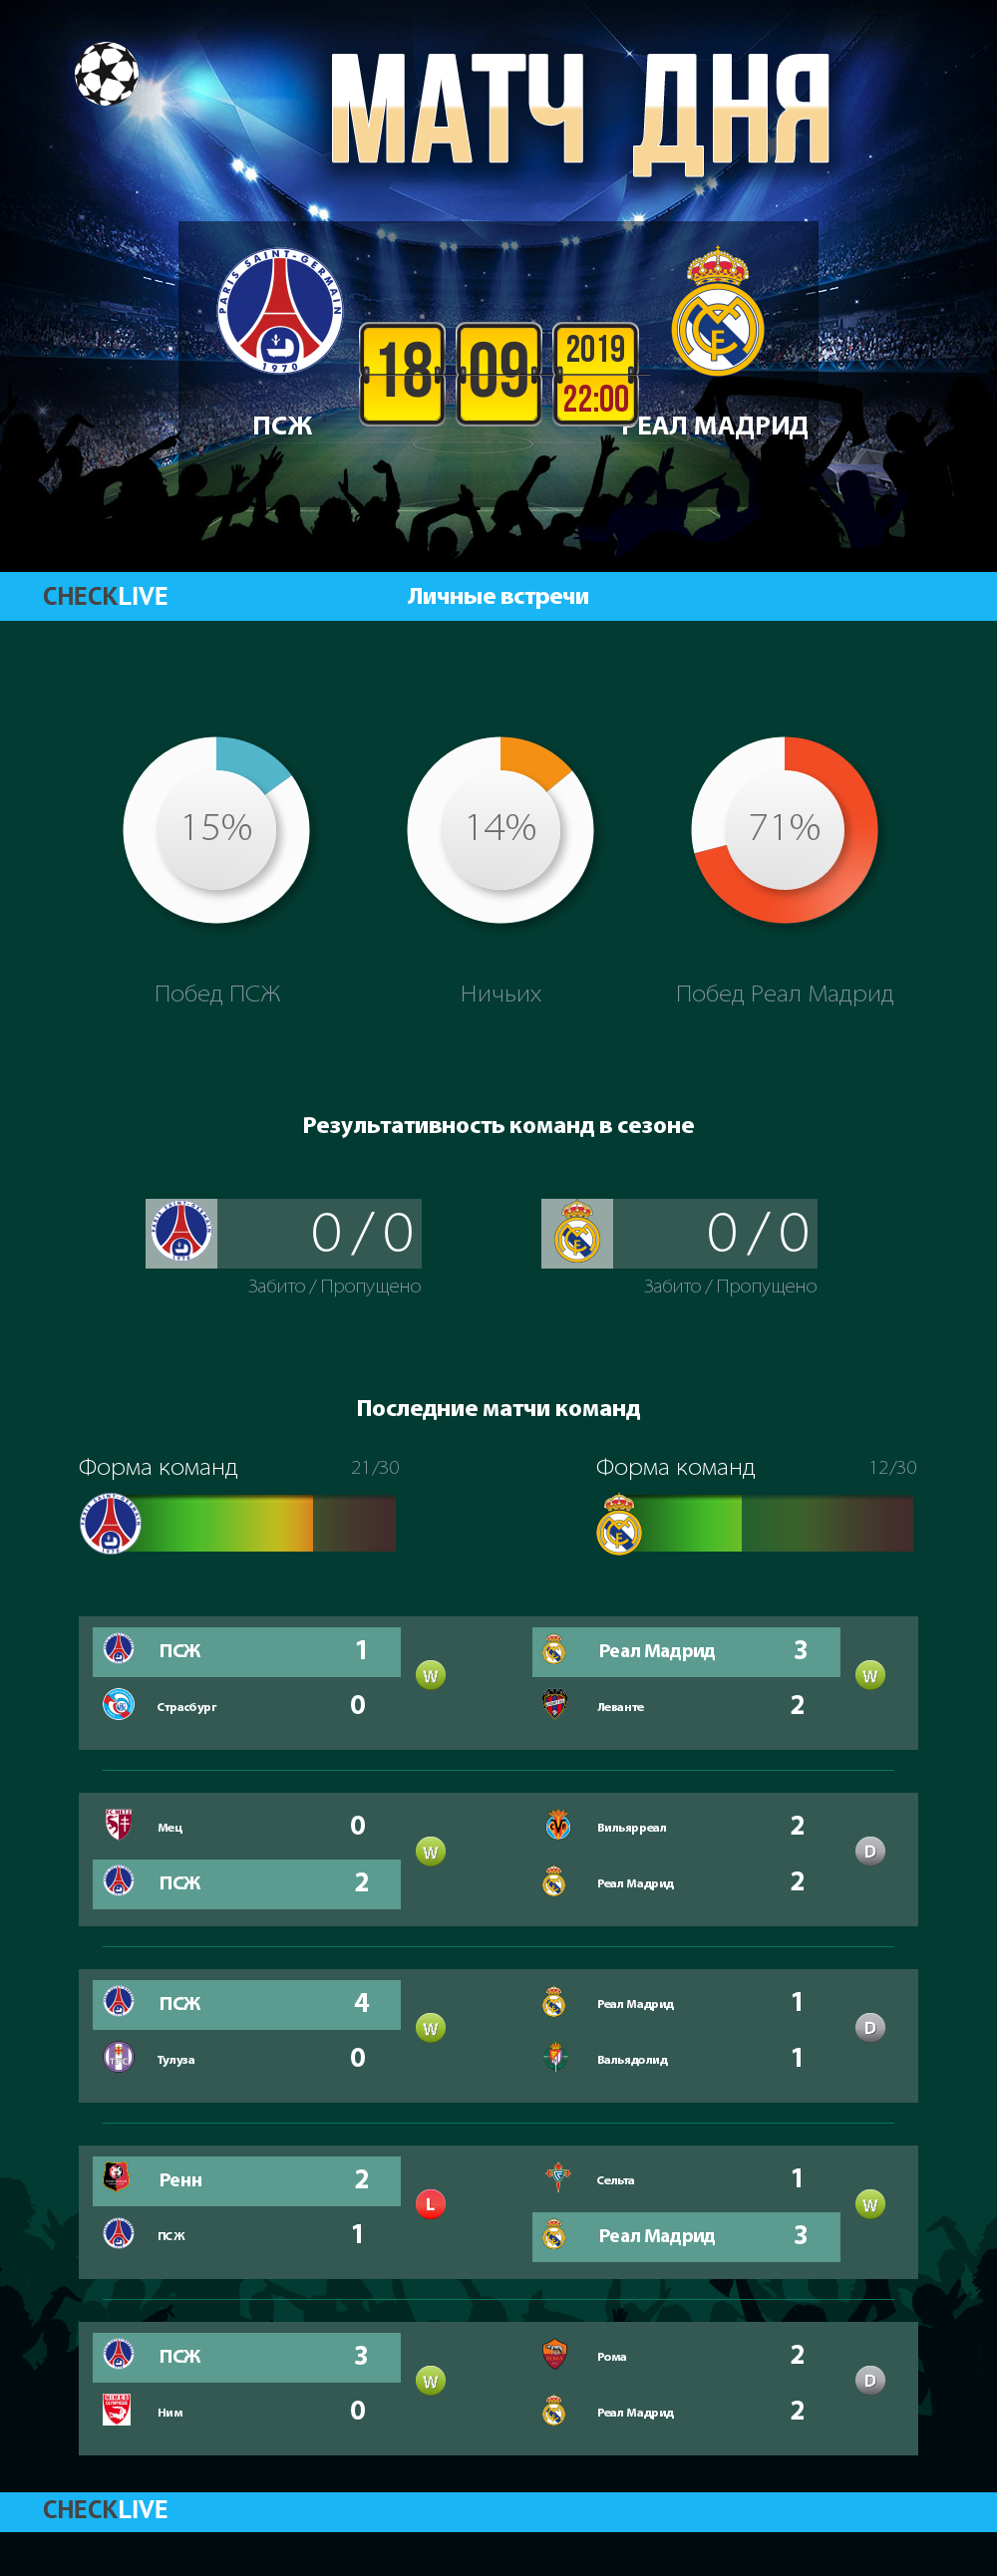 Инфографика ПСЖ и Реал Мадрид матч дня 18.09.2019